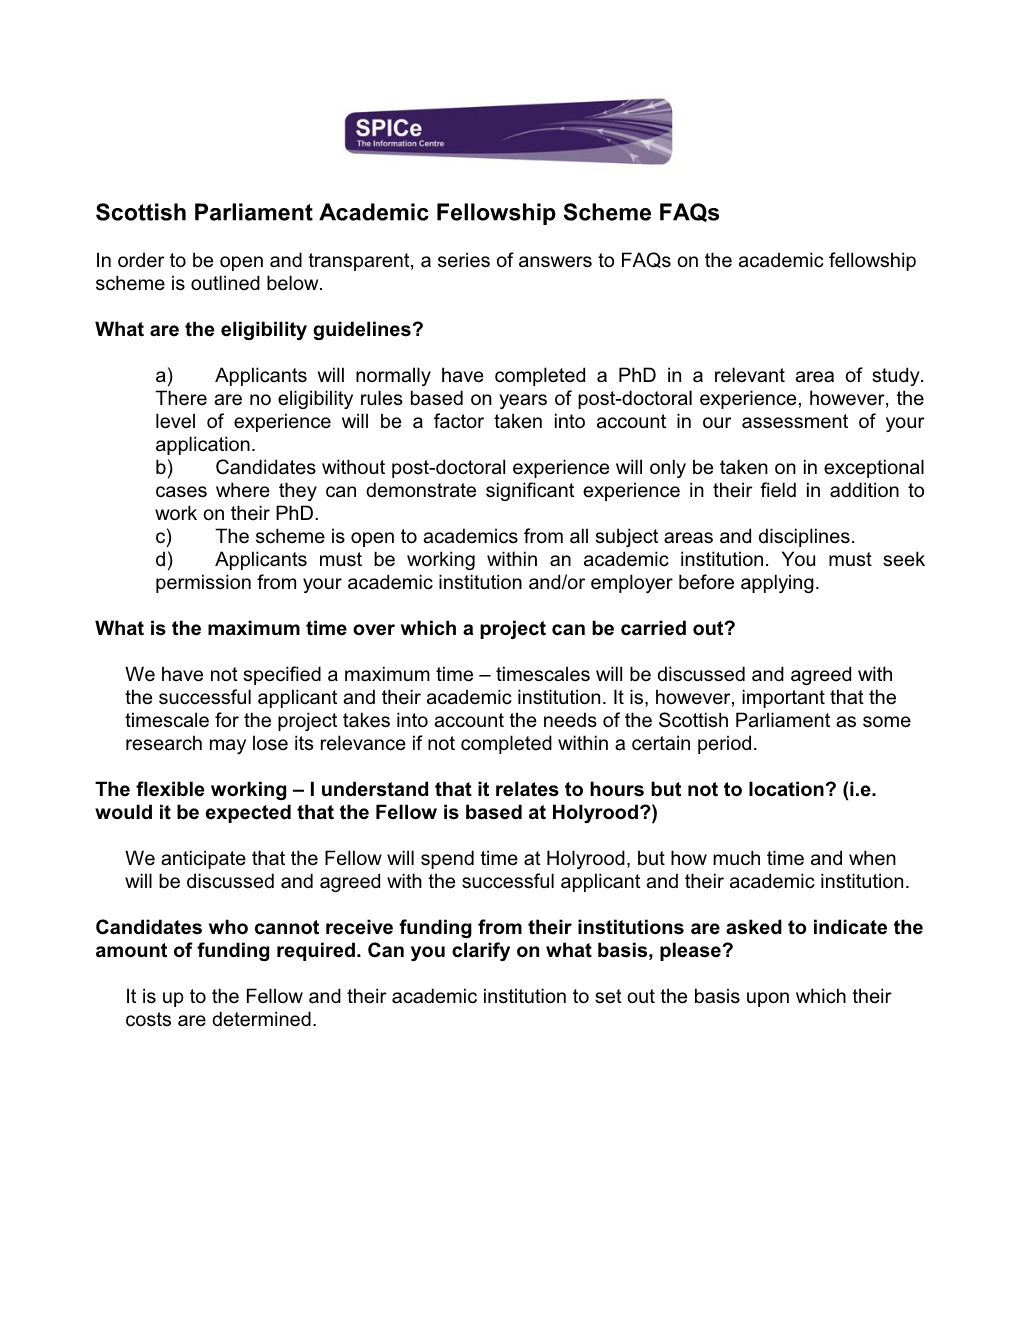 Scottish Parliament Academic Fellowship Scheme Faqs